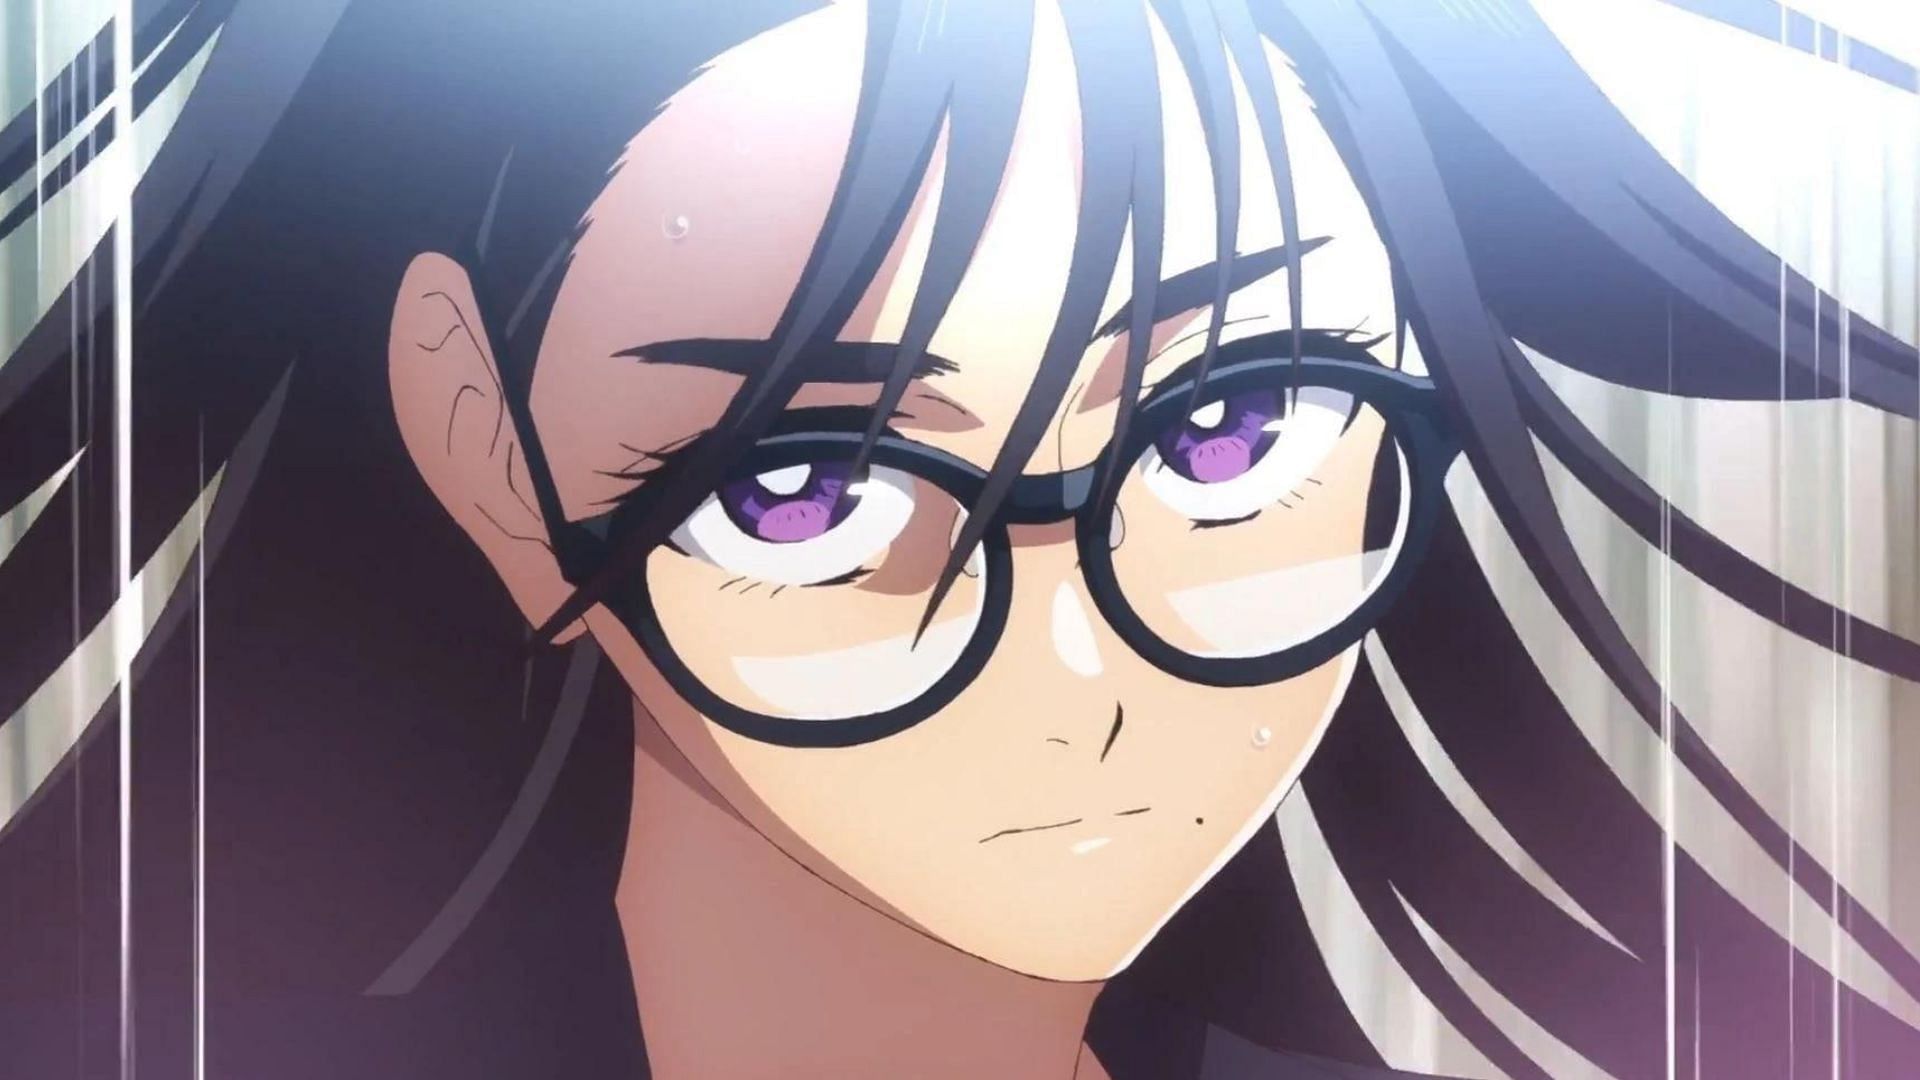 Hizuru Minakata as seen in the anime (Image via OLM)